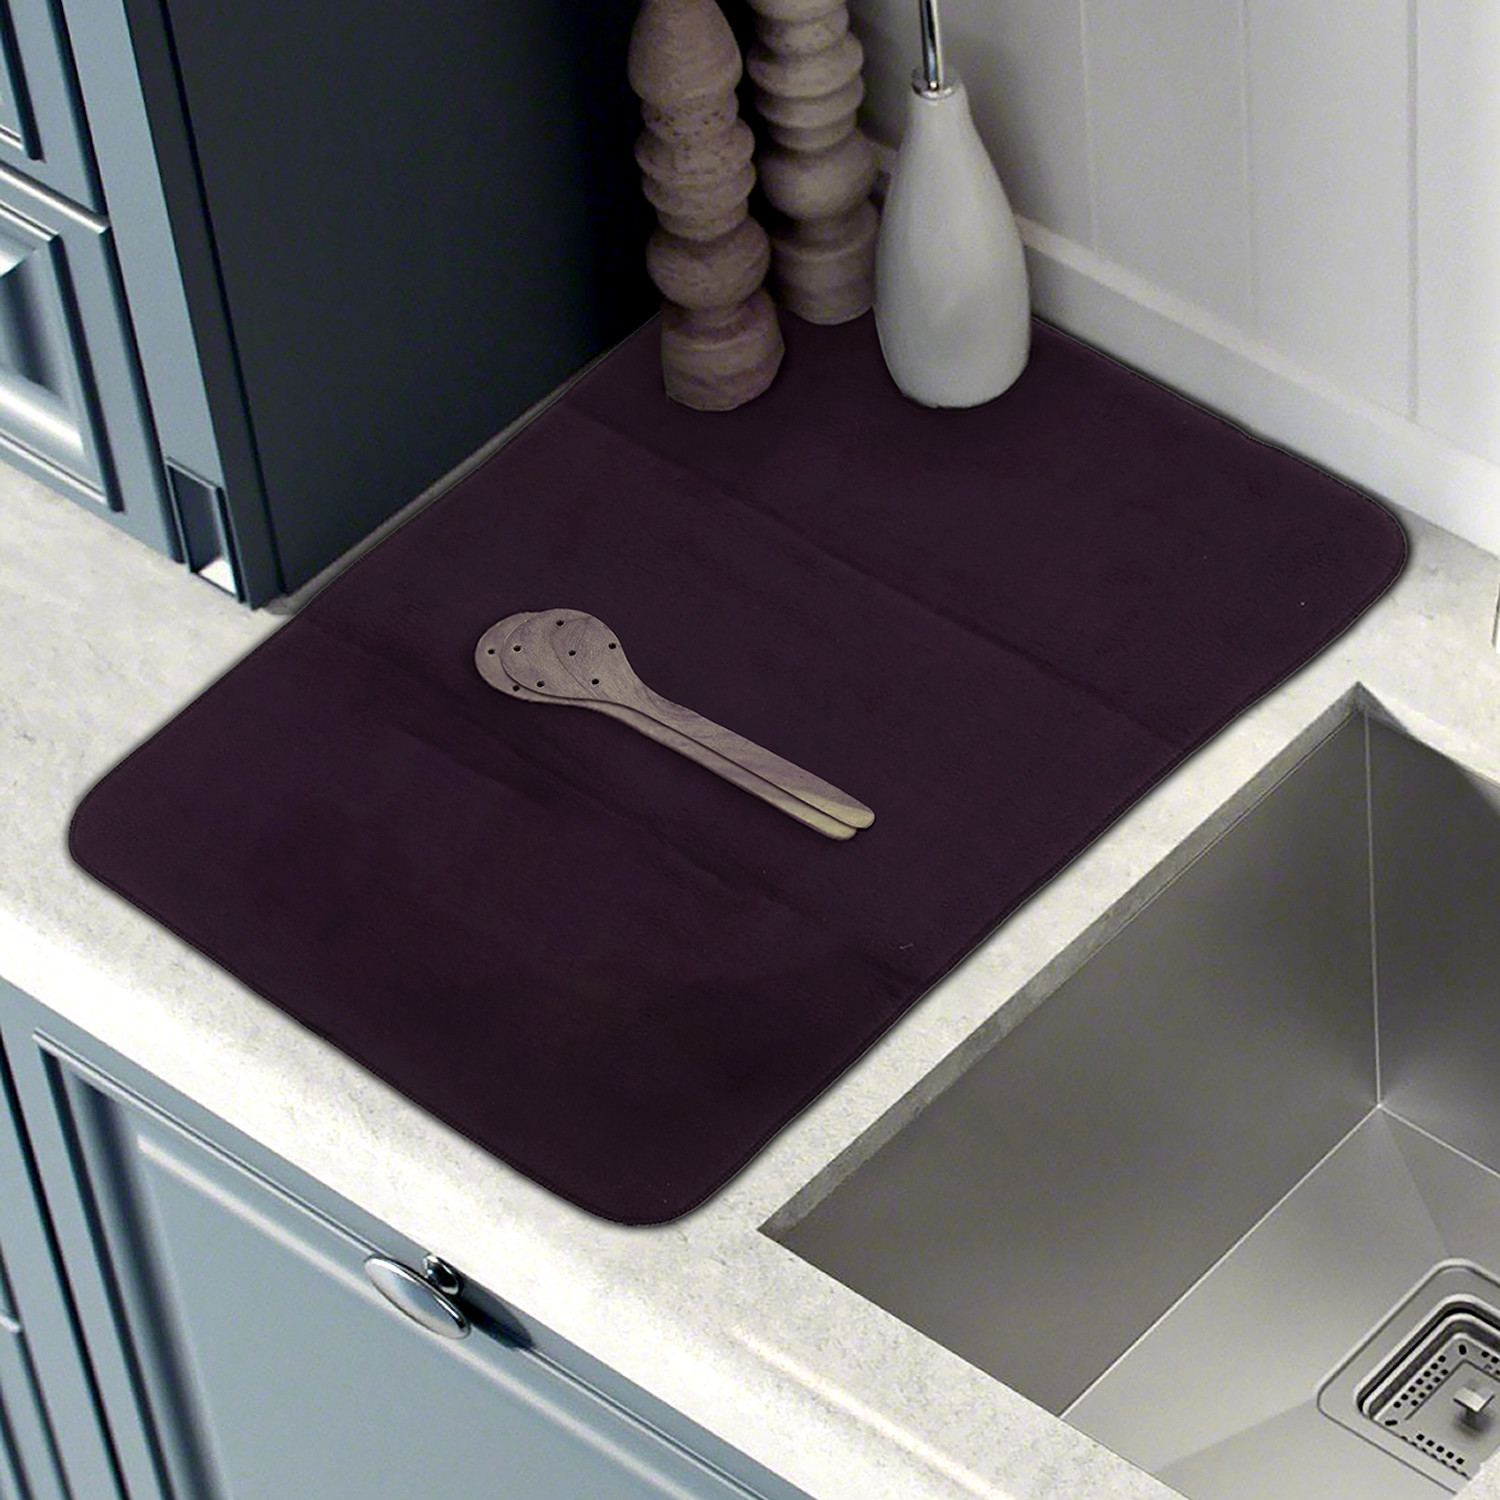 Kuber Industries Dish Dry Mat | Microfiber Drying Mat | Reversible Kitchen Drying Mat | Absorbent Mat | Kitchen Dish Dry Mat | 38x50 | Pack of 2 | Dark Purple & Green